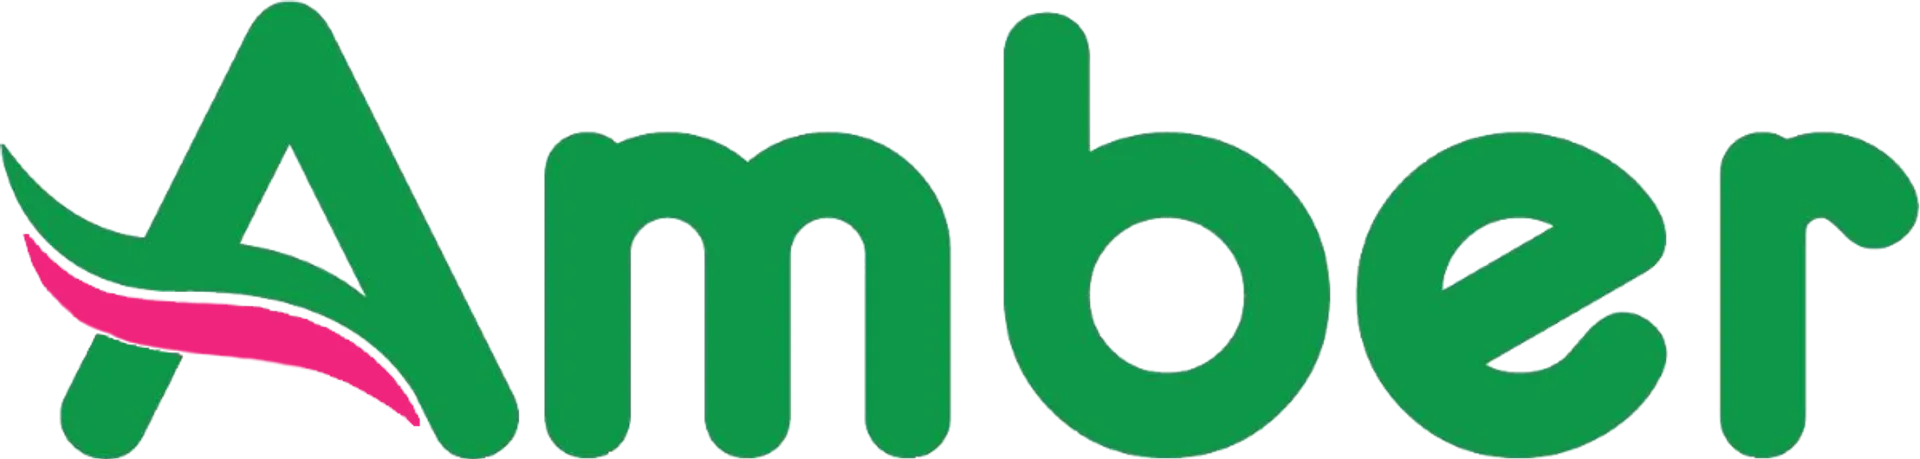 AMBER logo. Current catalogue